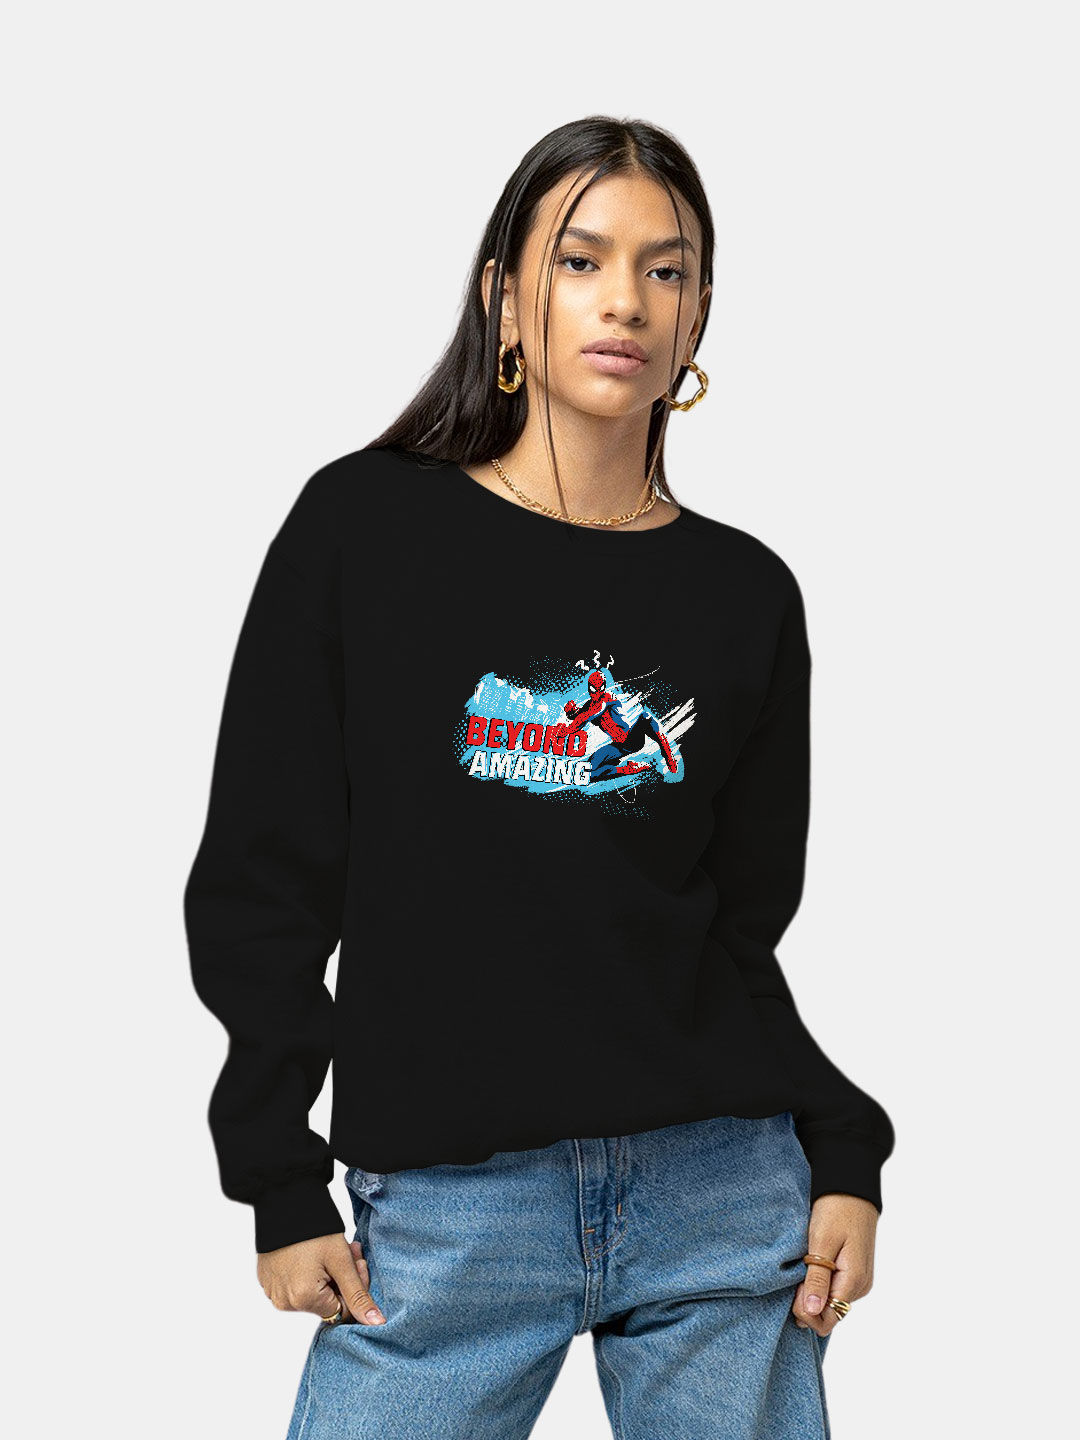 Buy Beyond Amazing Spiderman - Female Designer Sweatshirt Sweatshirts Online